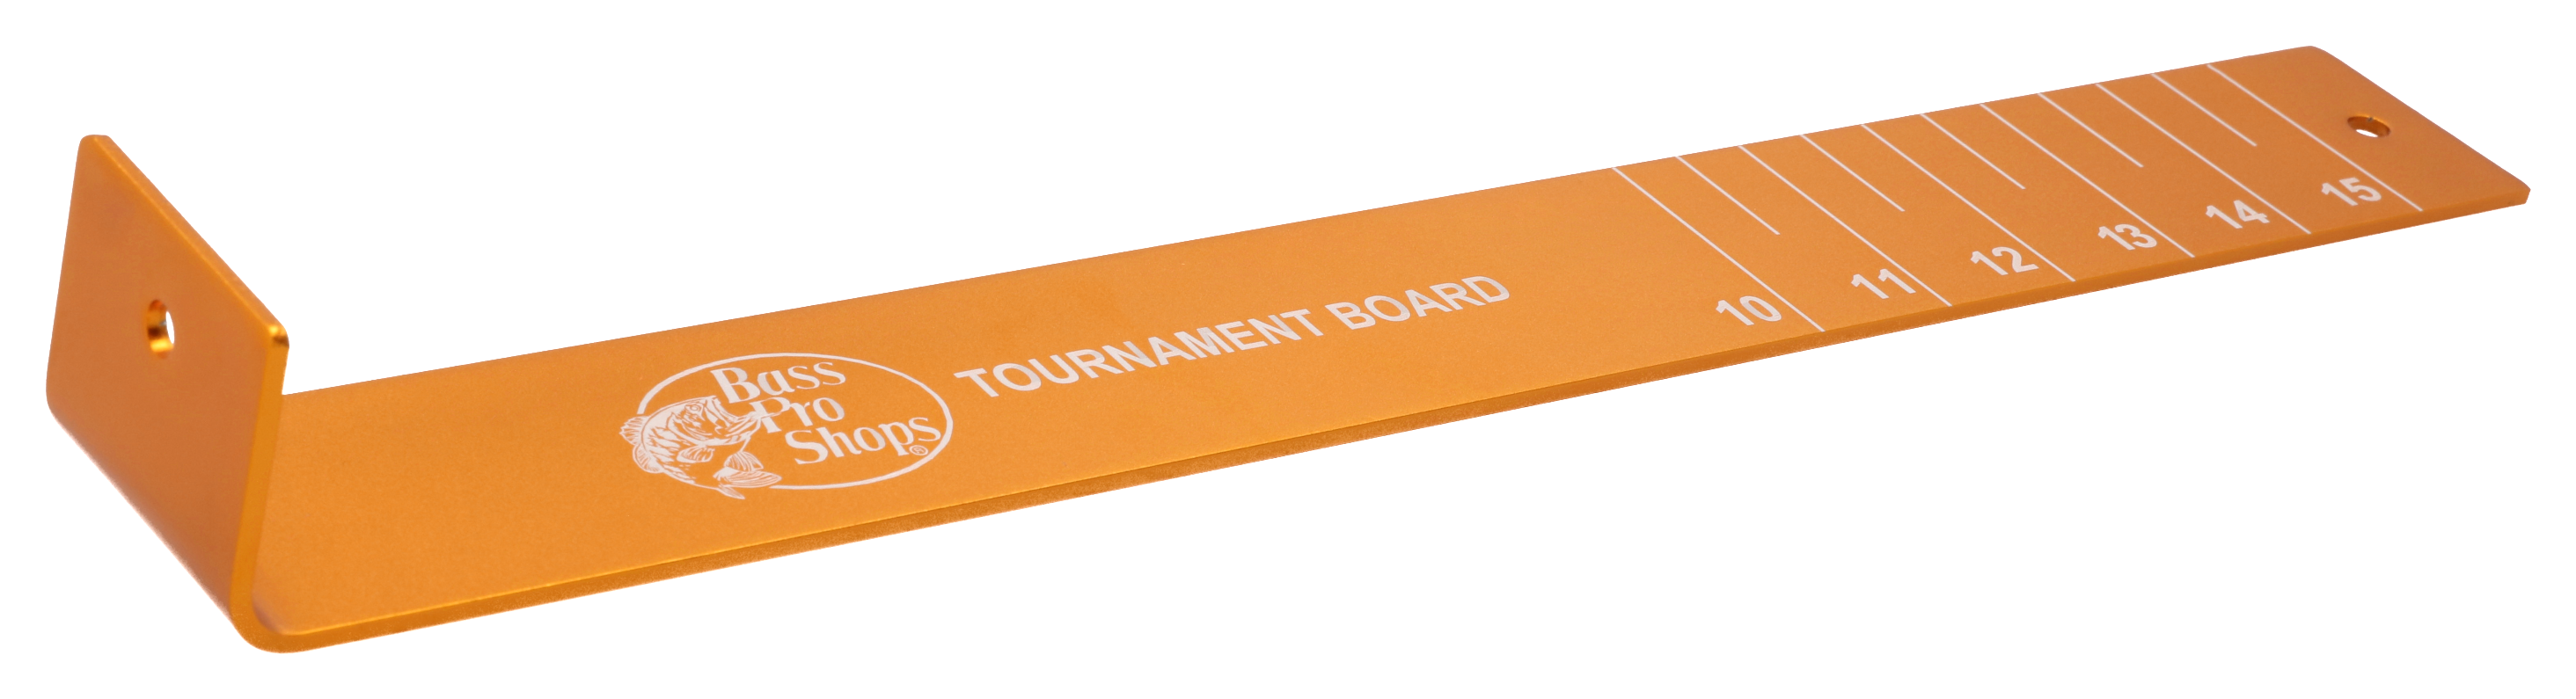 Bass Pro Shops Tournament Measuring Board - 22